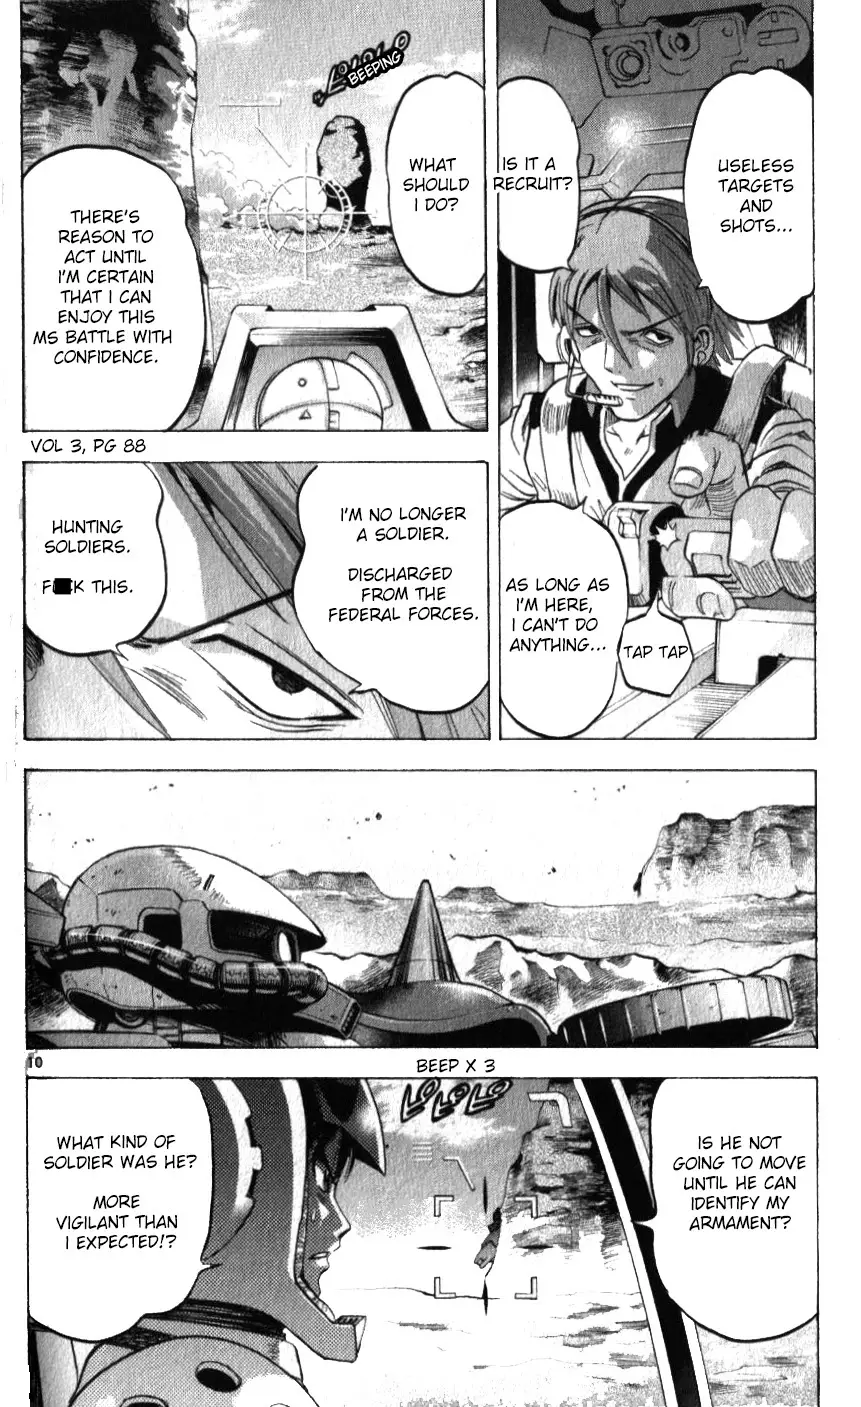 Mobile Suit Gundam Aggressor - 12 page 9-02ea0405